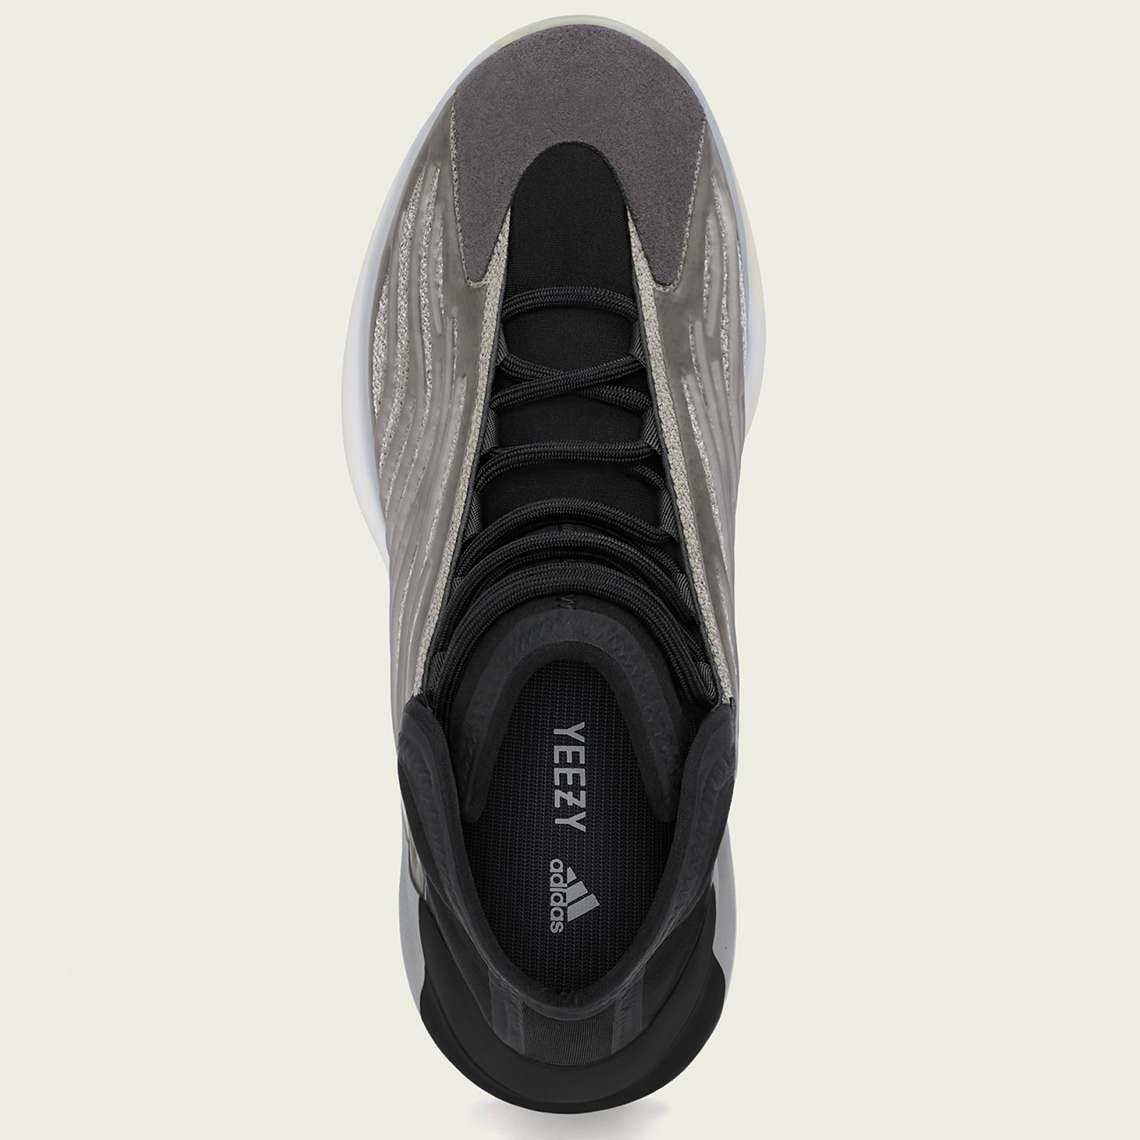 Adidas Yeezy Quantum Barium Store List Release Info 5